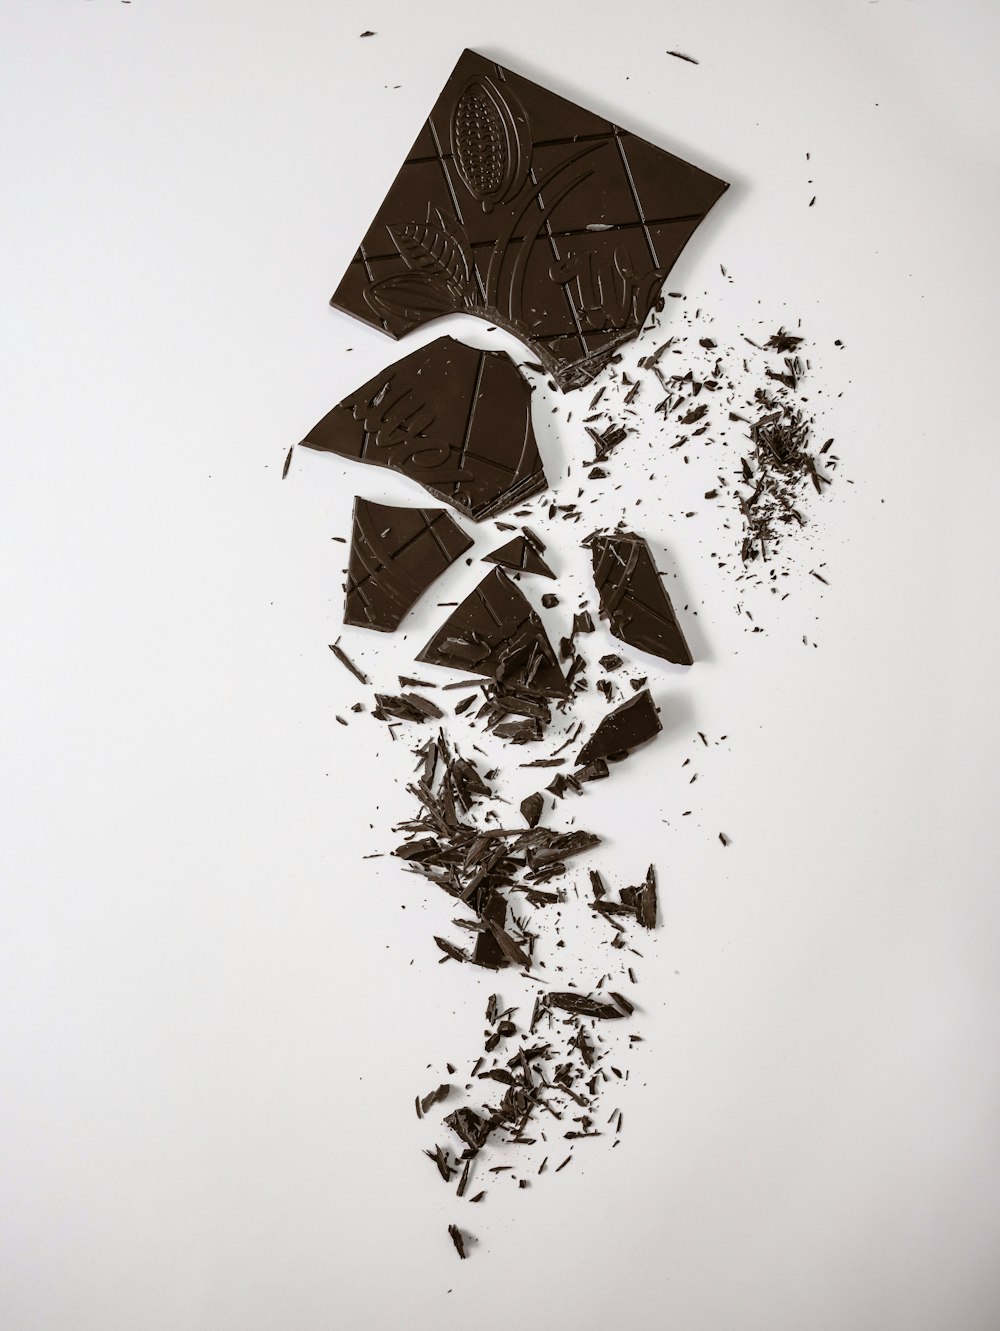 a piece of chocolate is broken into pieces